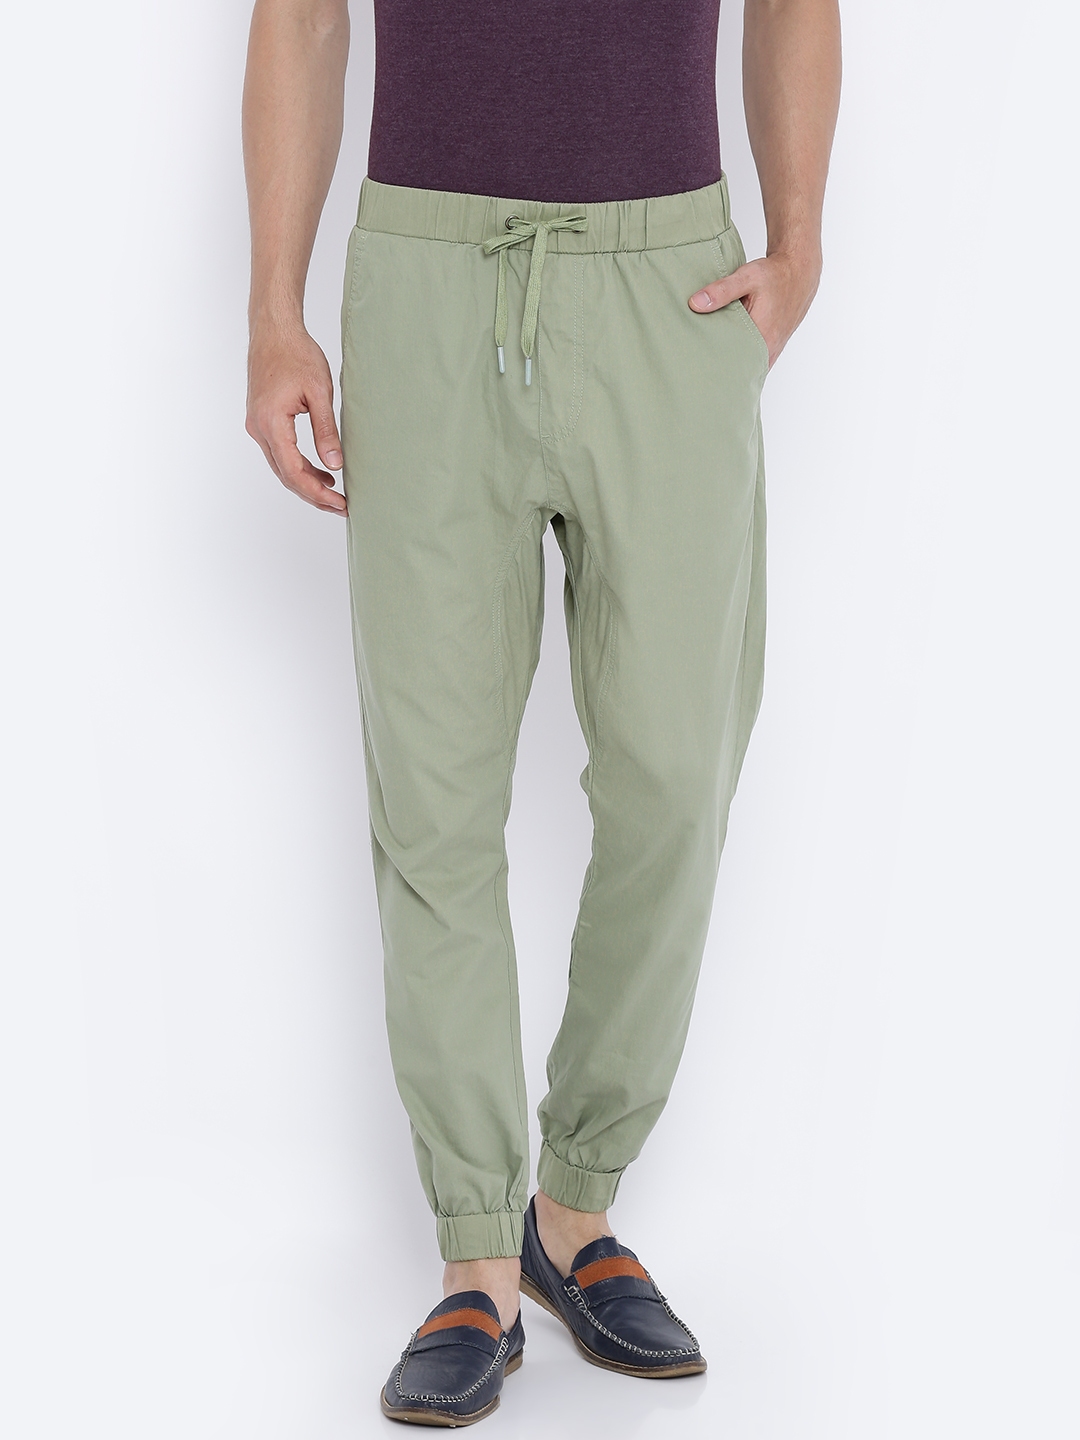 Buy URBAN EAGLE by Pantaloons Men Brown Solid Regular Fit Jogger Trousers  online  Looksgudin